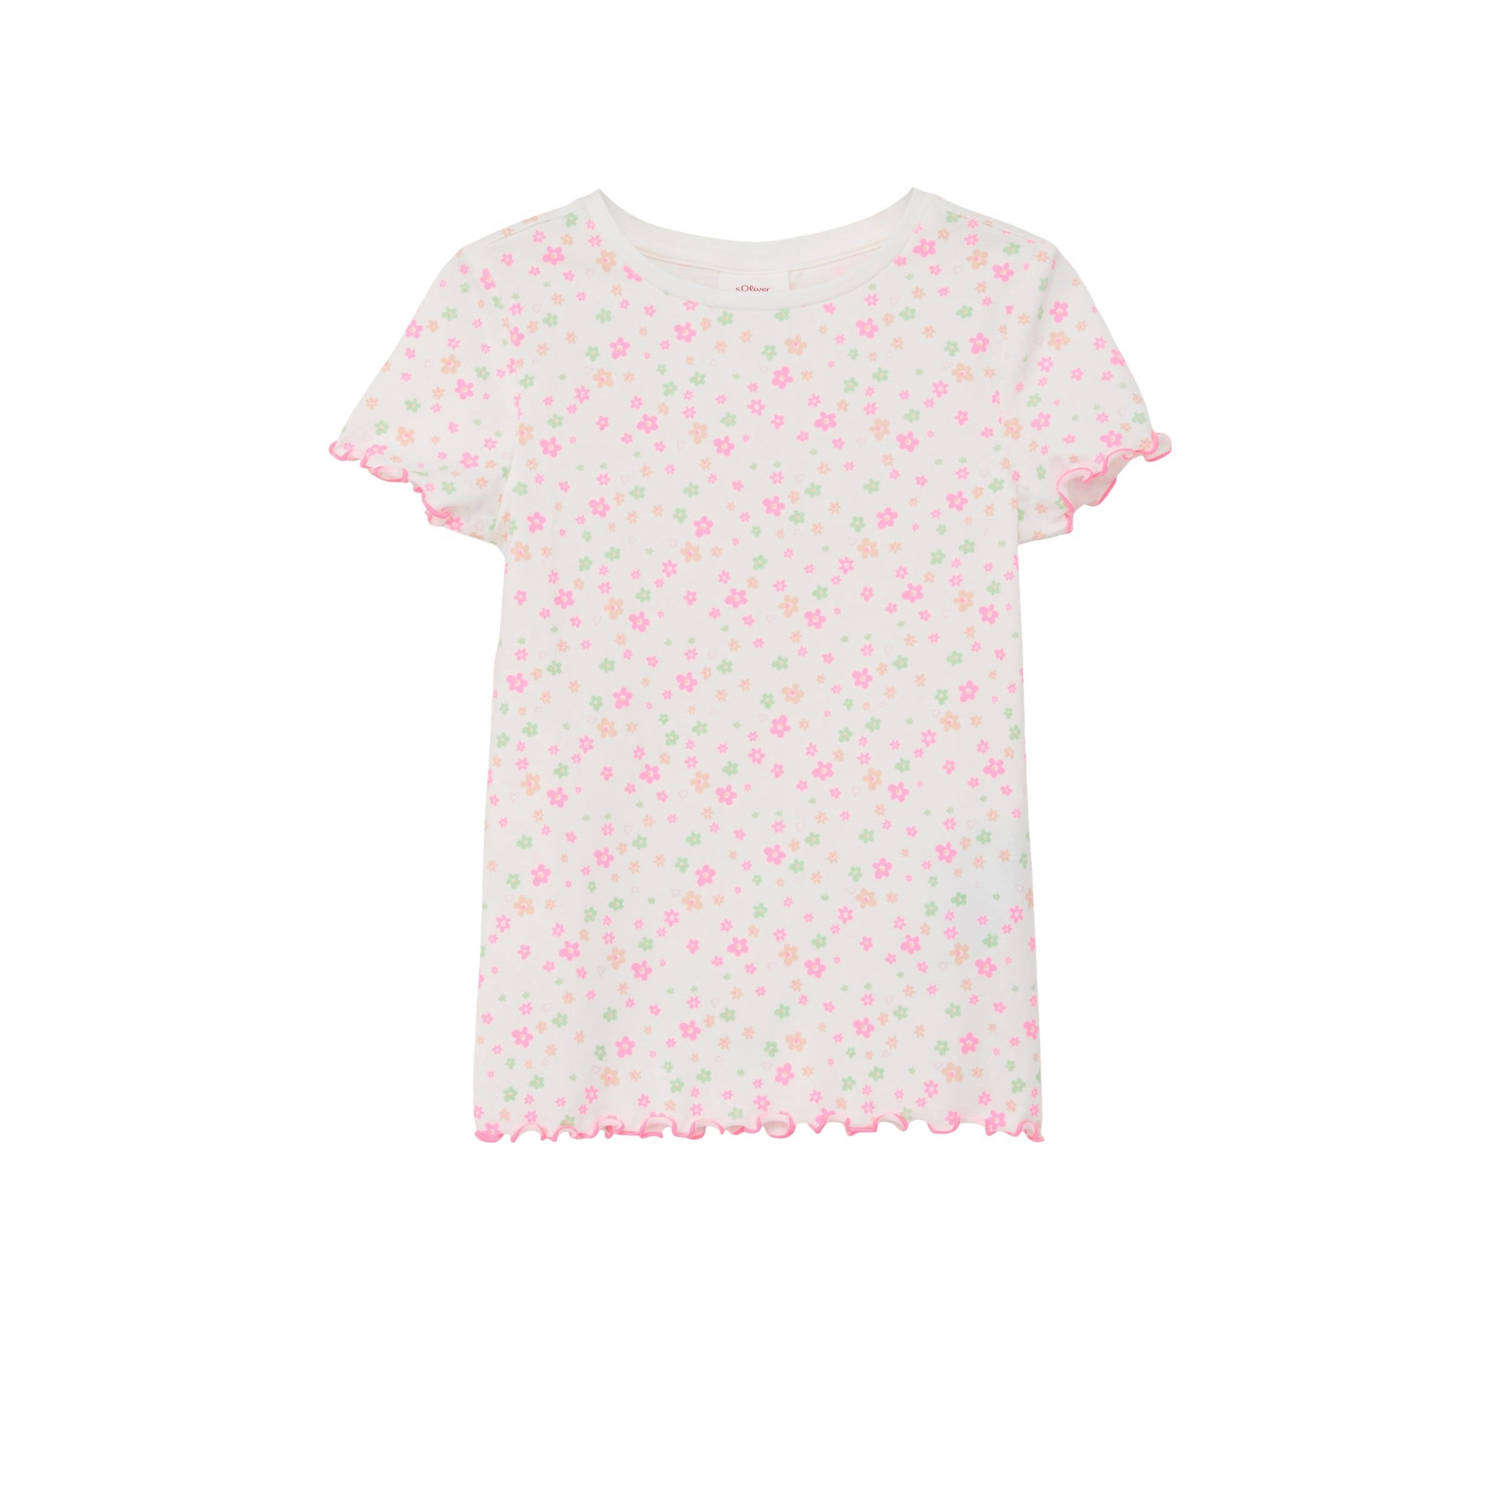 S.Oliver gebloemd T-shirt wit roze Multi Meisjes Stretchkatoen Ronde hals 104 110